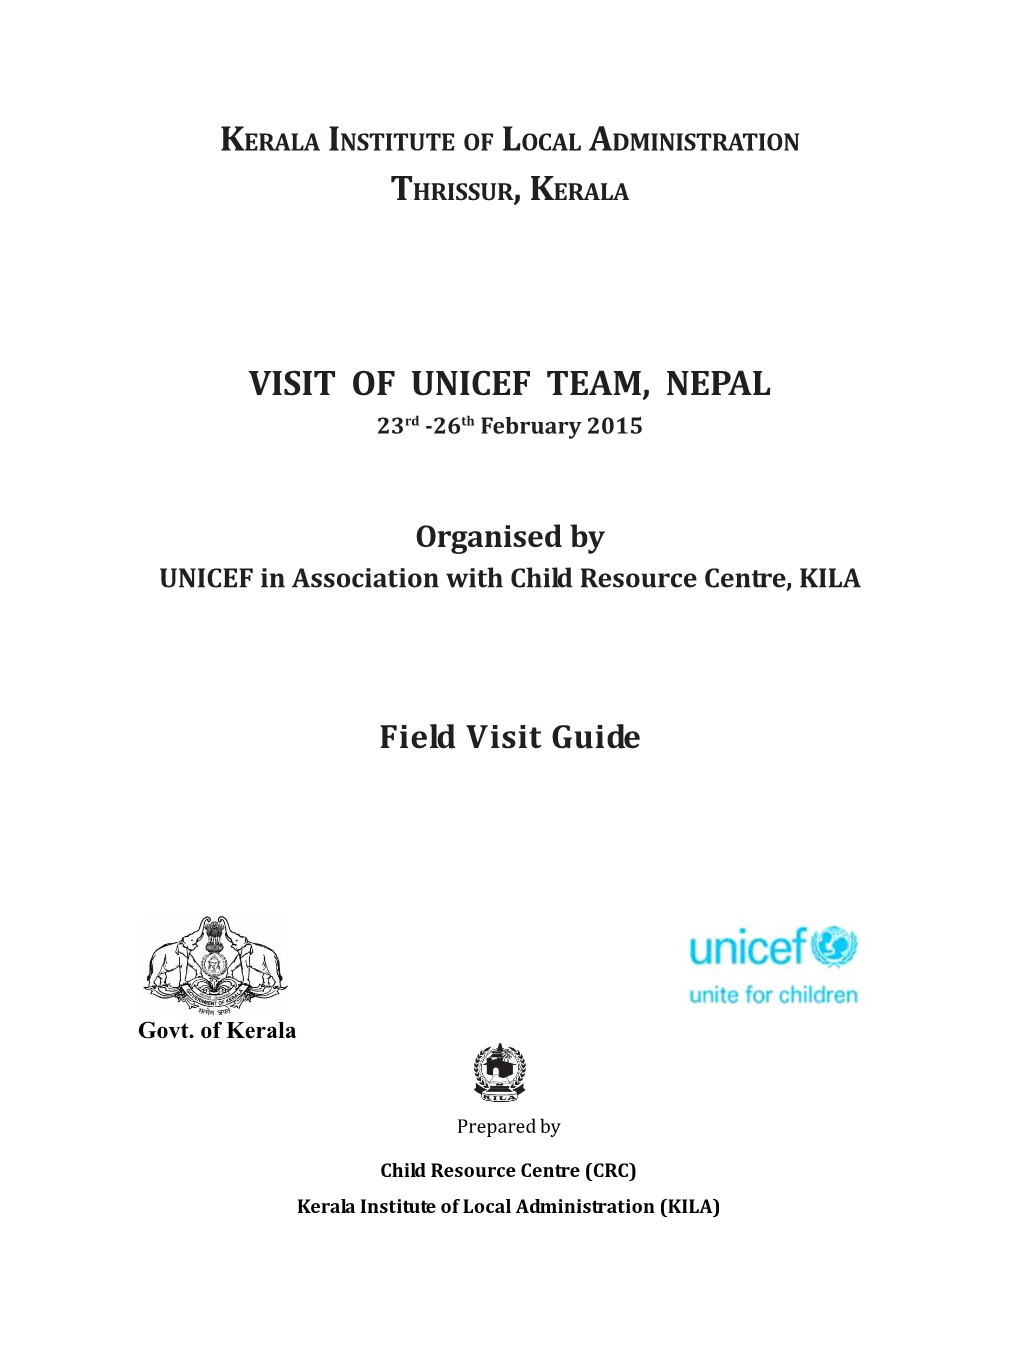 VISIT of UNICEF TEAM, NEPAL 23Rd -26Th February 2015